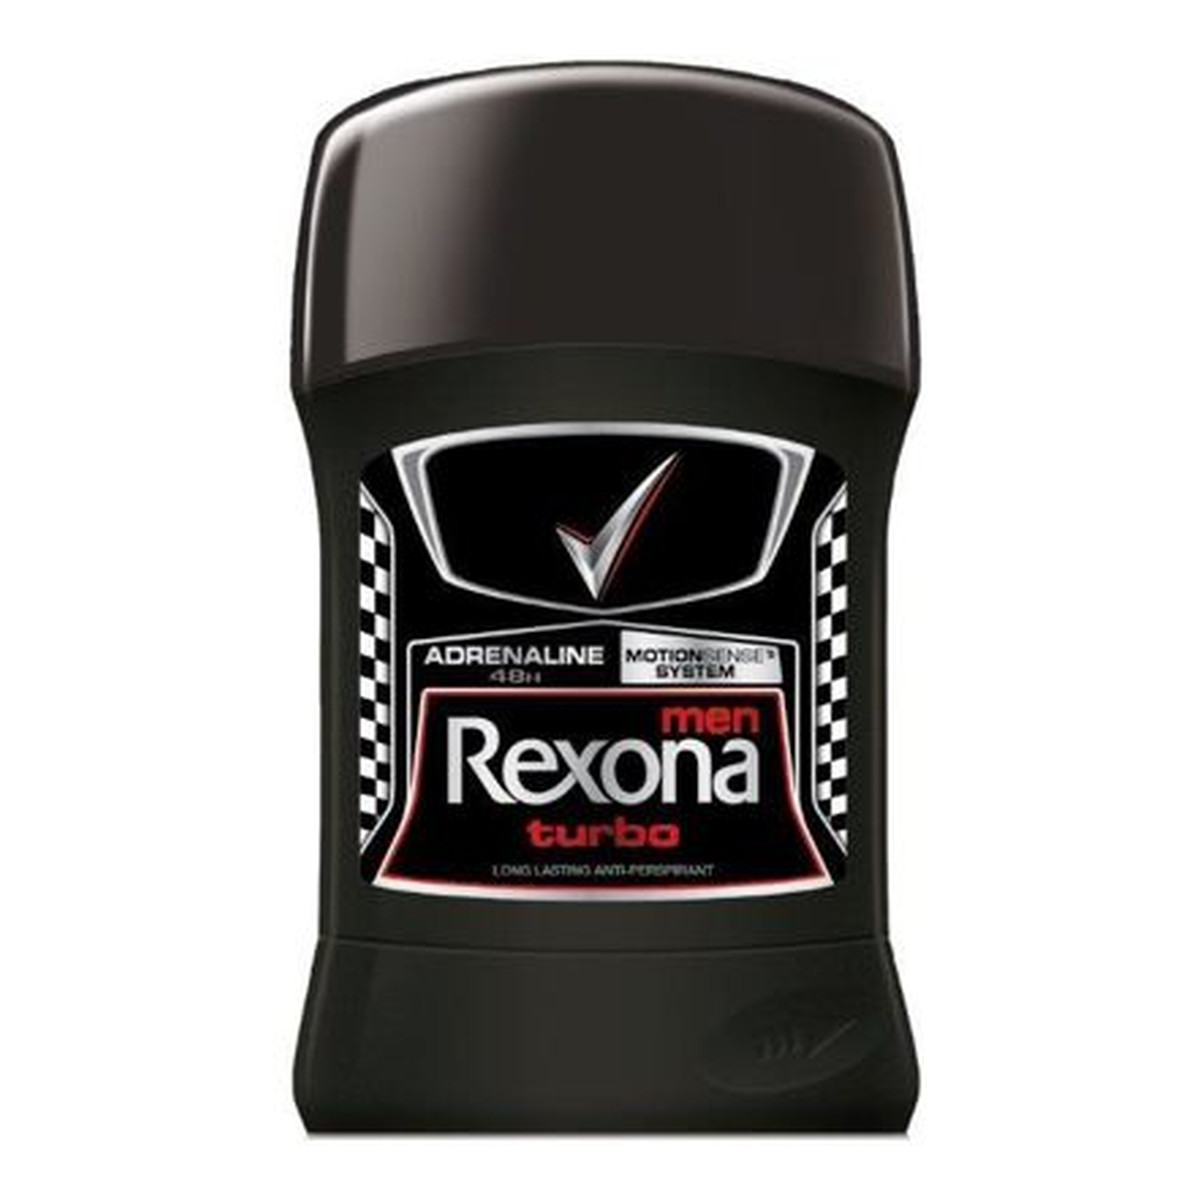 Rexona Motion Sense Dezodorant antyperspiracyjny sztyft Men Turbo 50ml